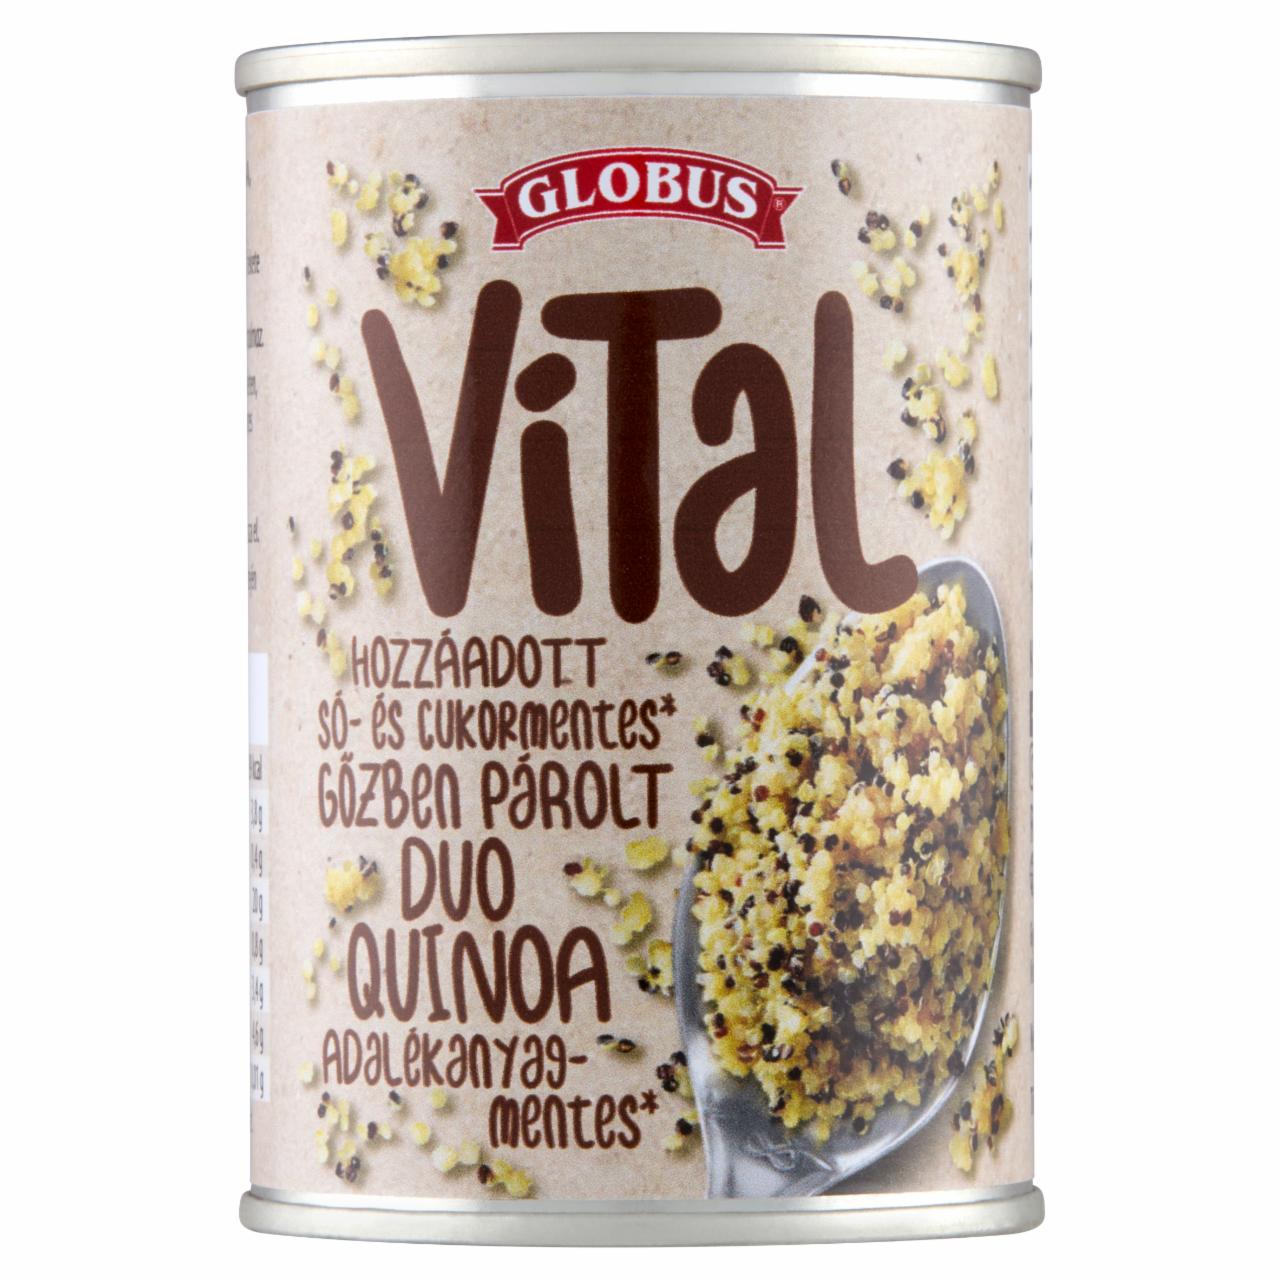 Képek - Globus Vital gőzben párolt duo quinoa 110 g